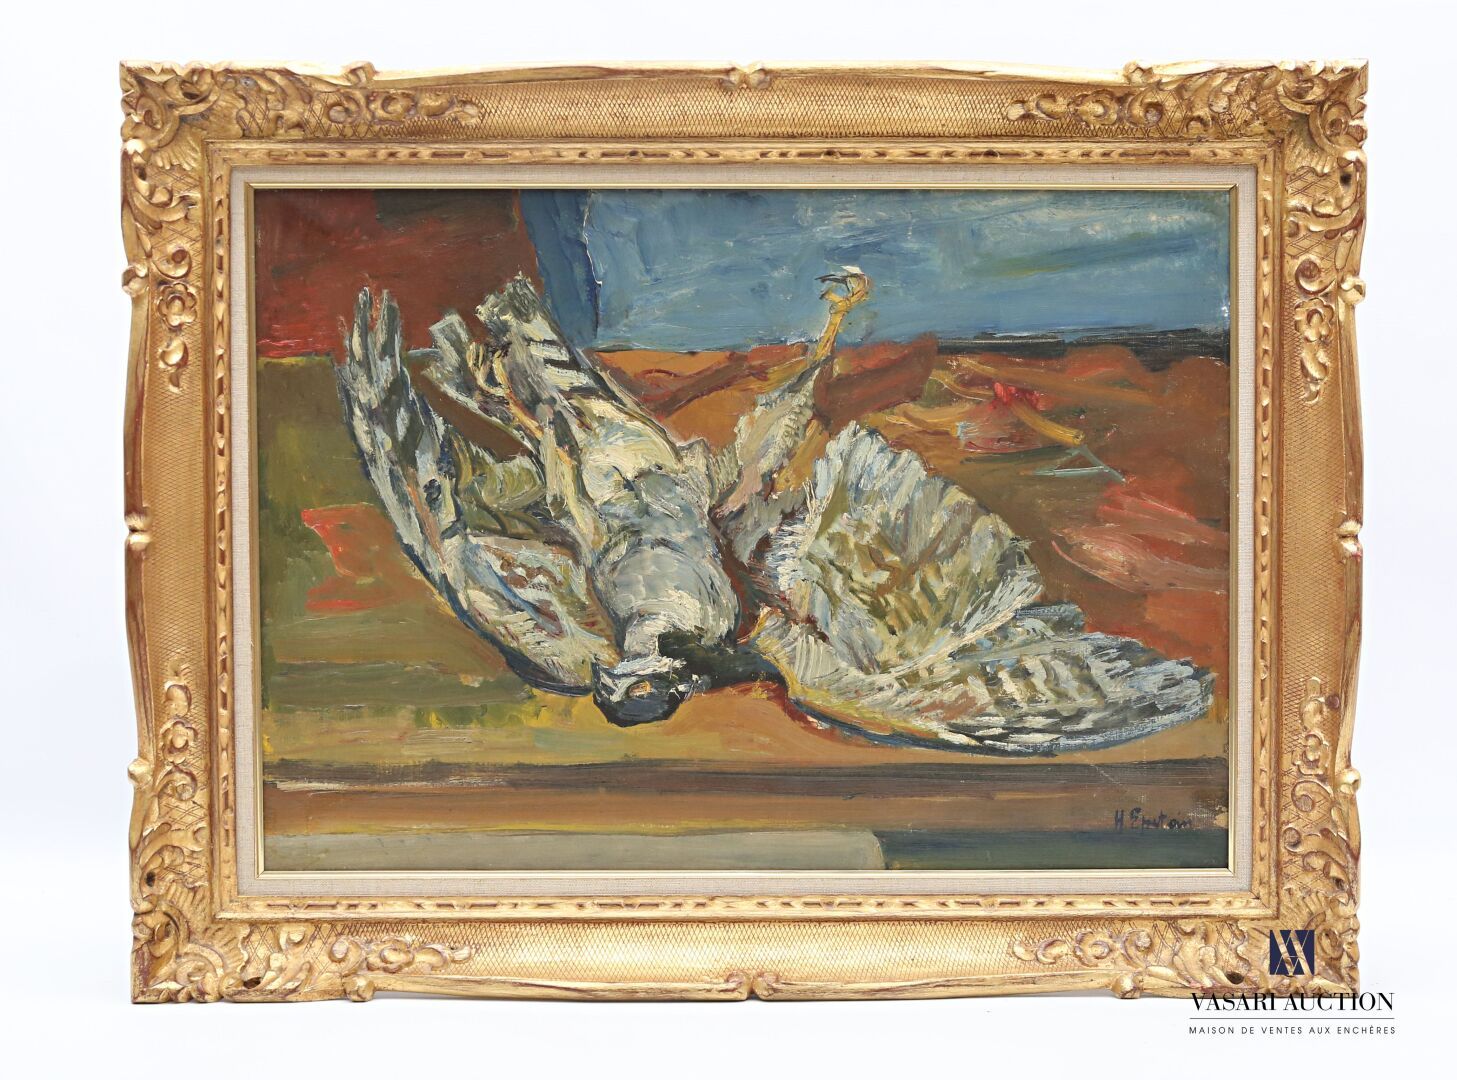 Null 亨利-埃普斯泰因(1892-1944)
猎鹰
布面油画
右下方有签名
46 x 65厘米
有框作品